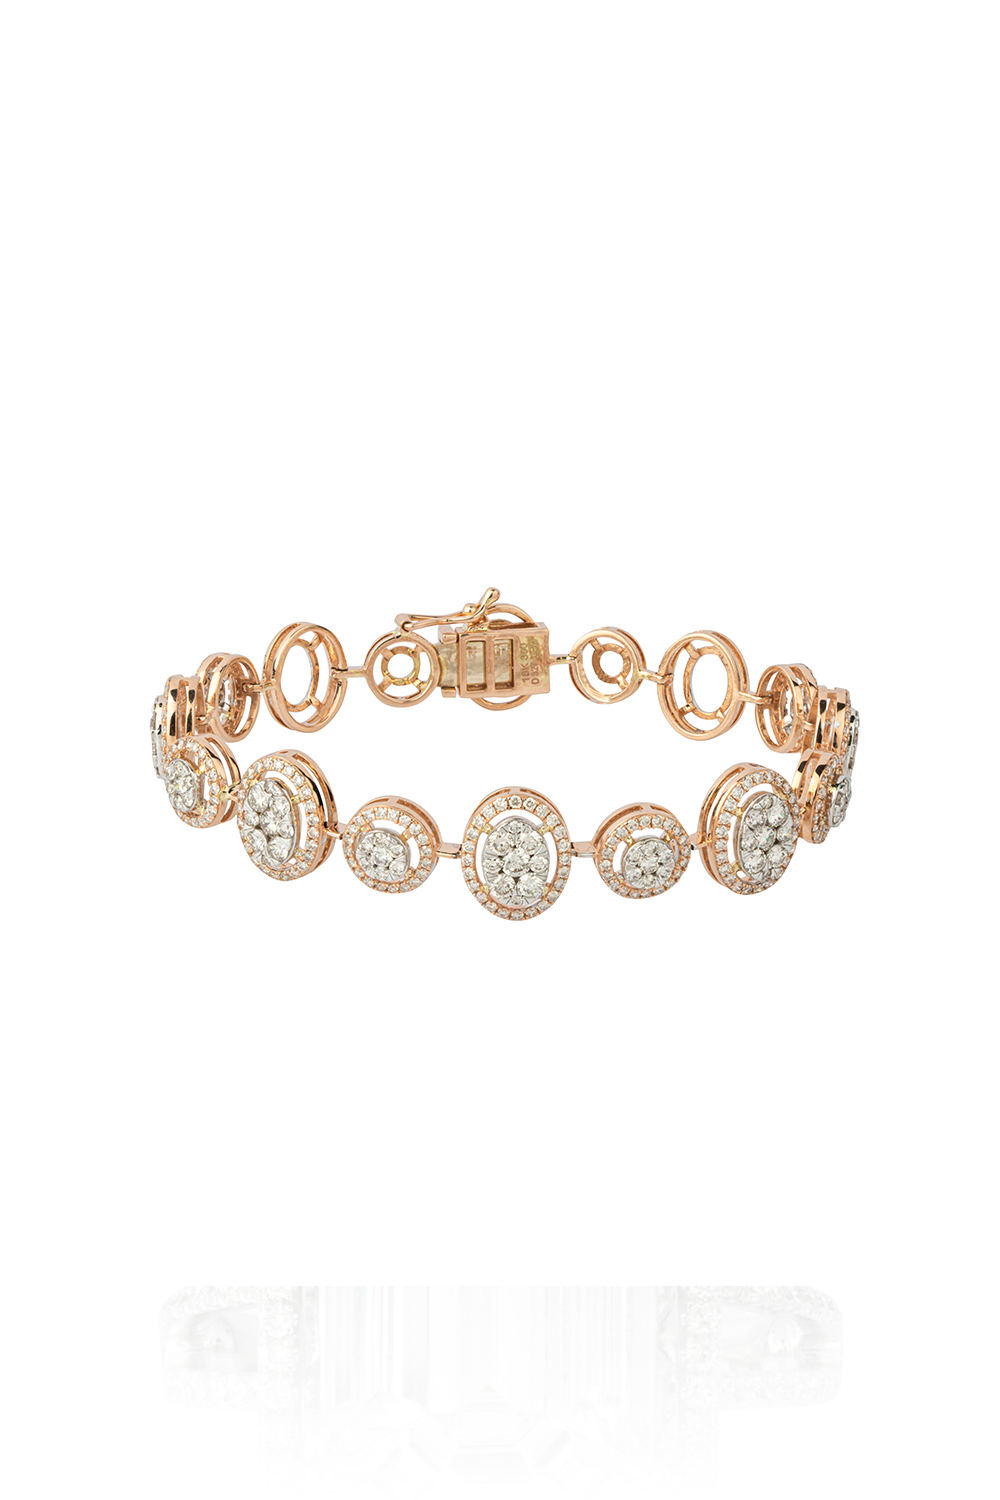 Natural diamond tennis bracelet in 18k gold